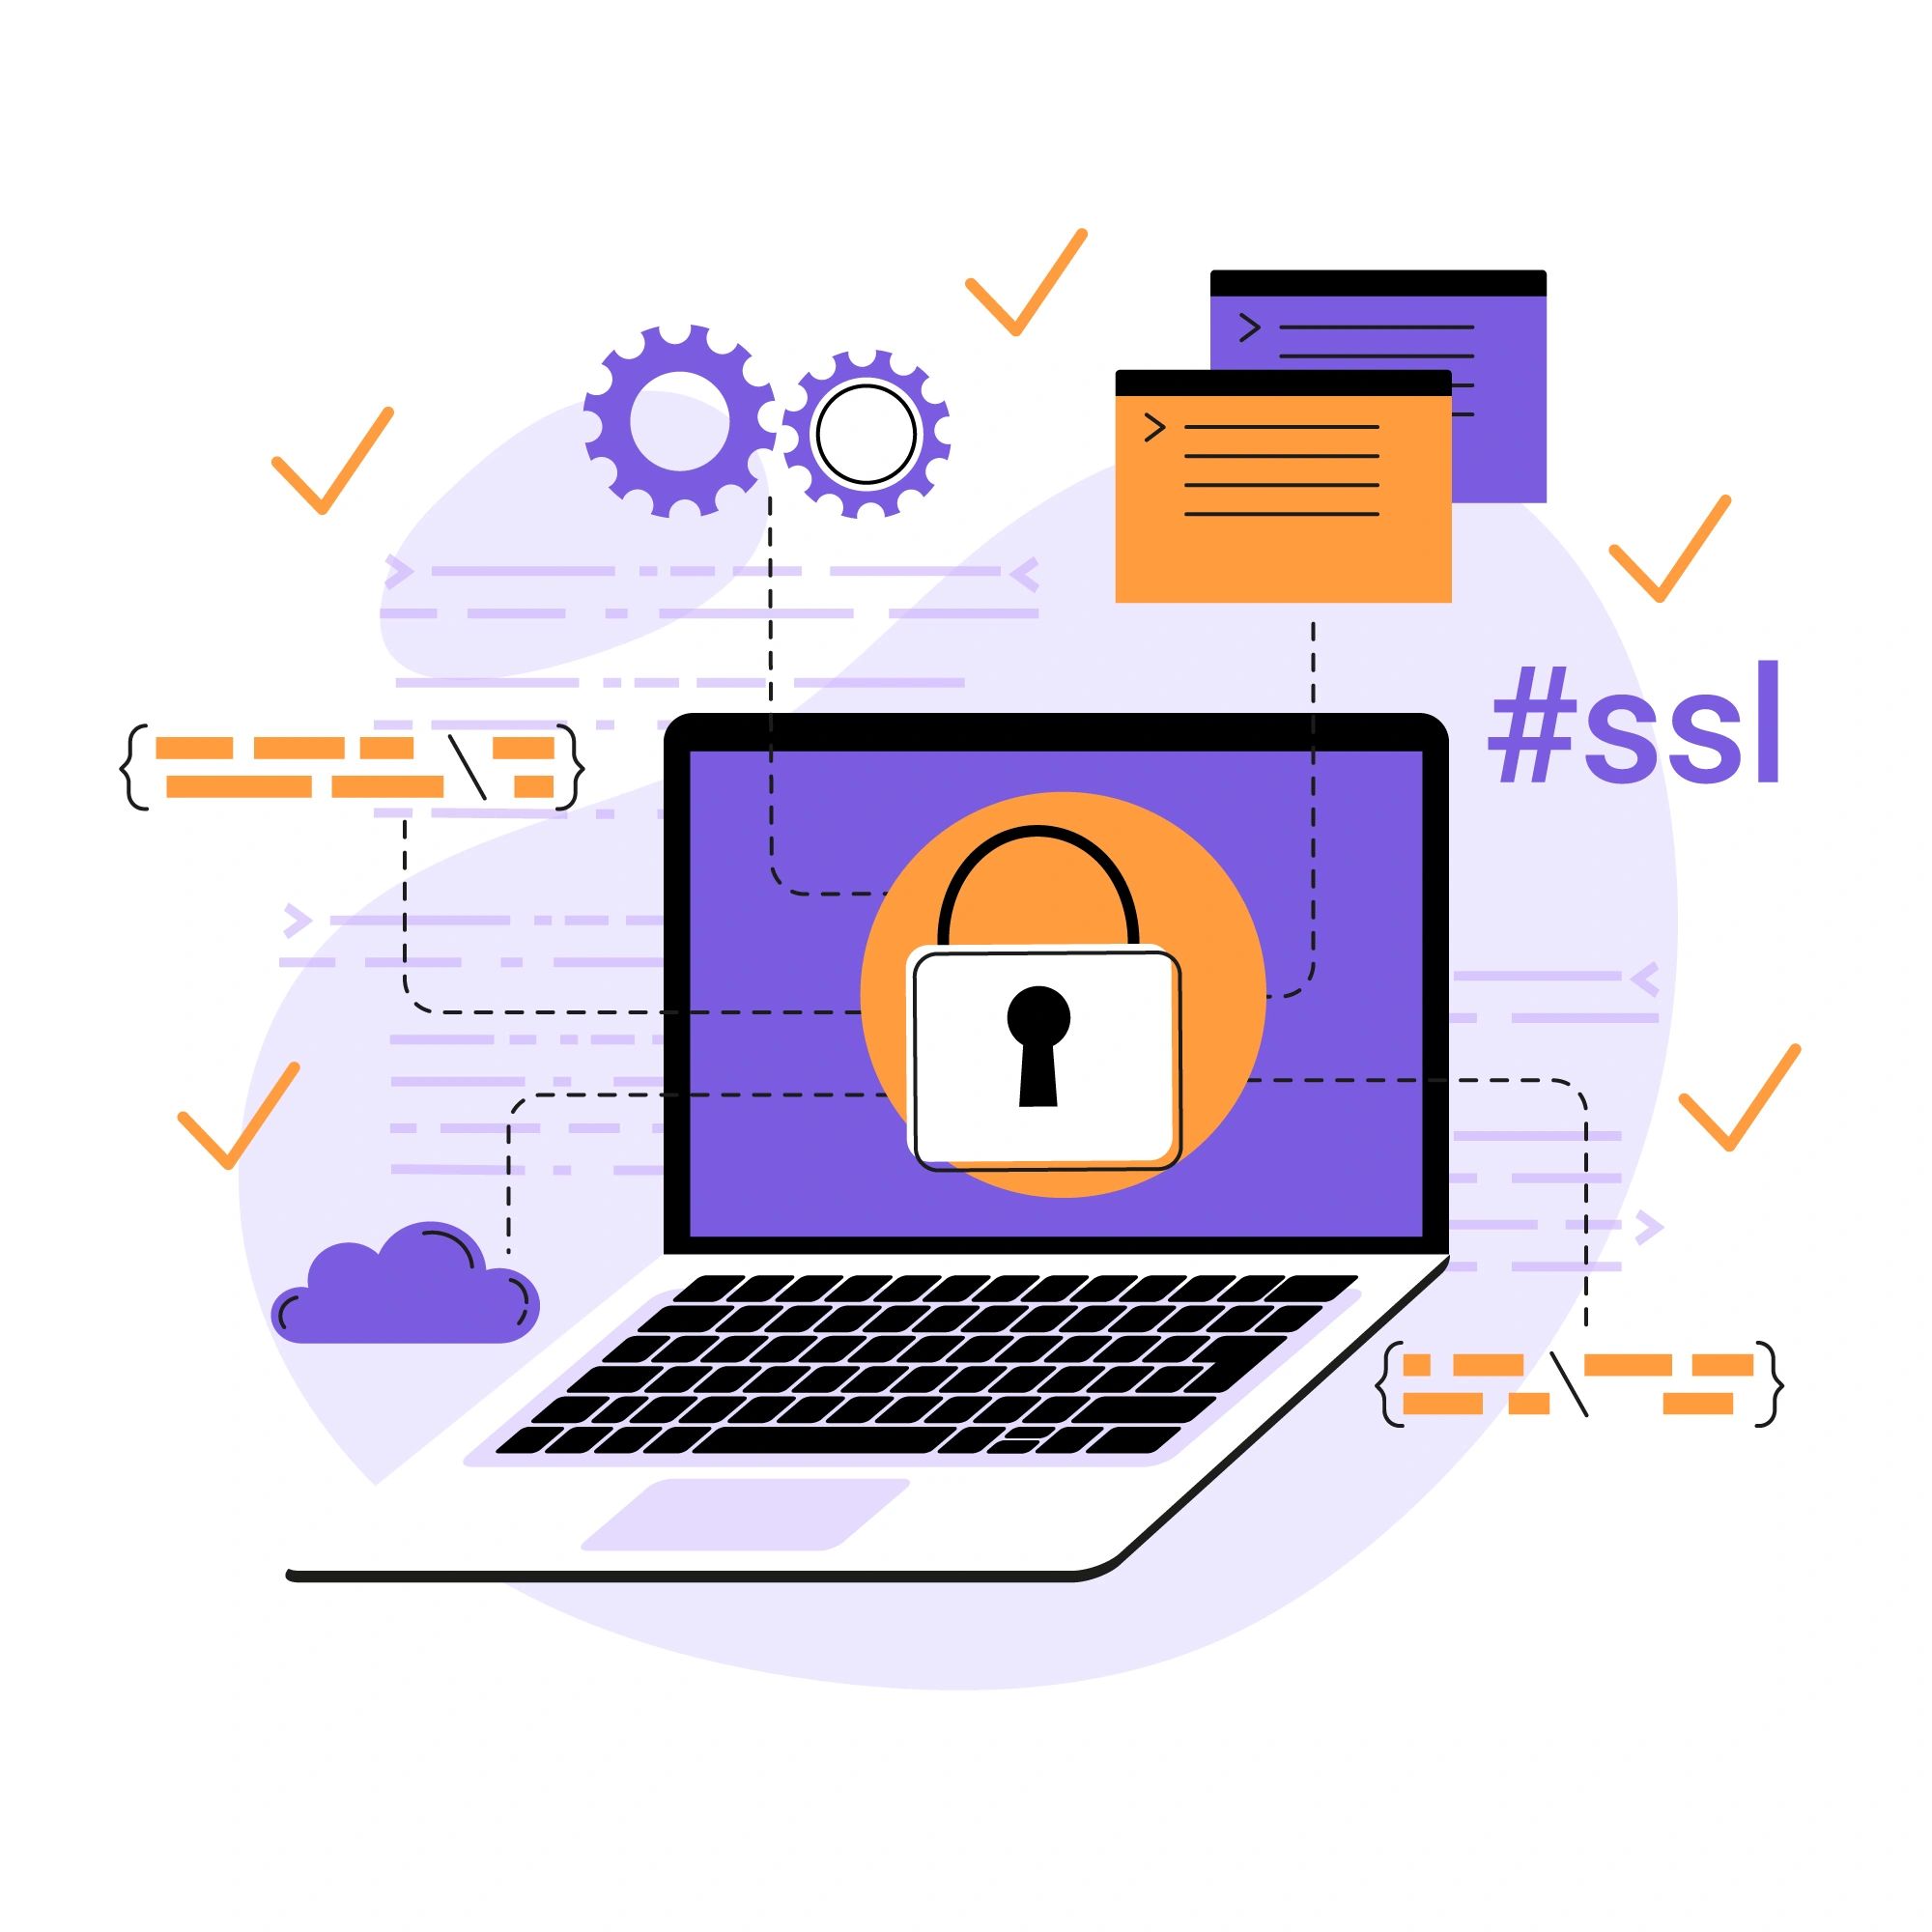 Ssl sslerror ssl certificate verify failed